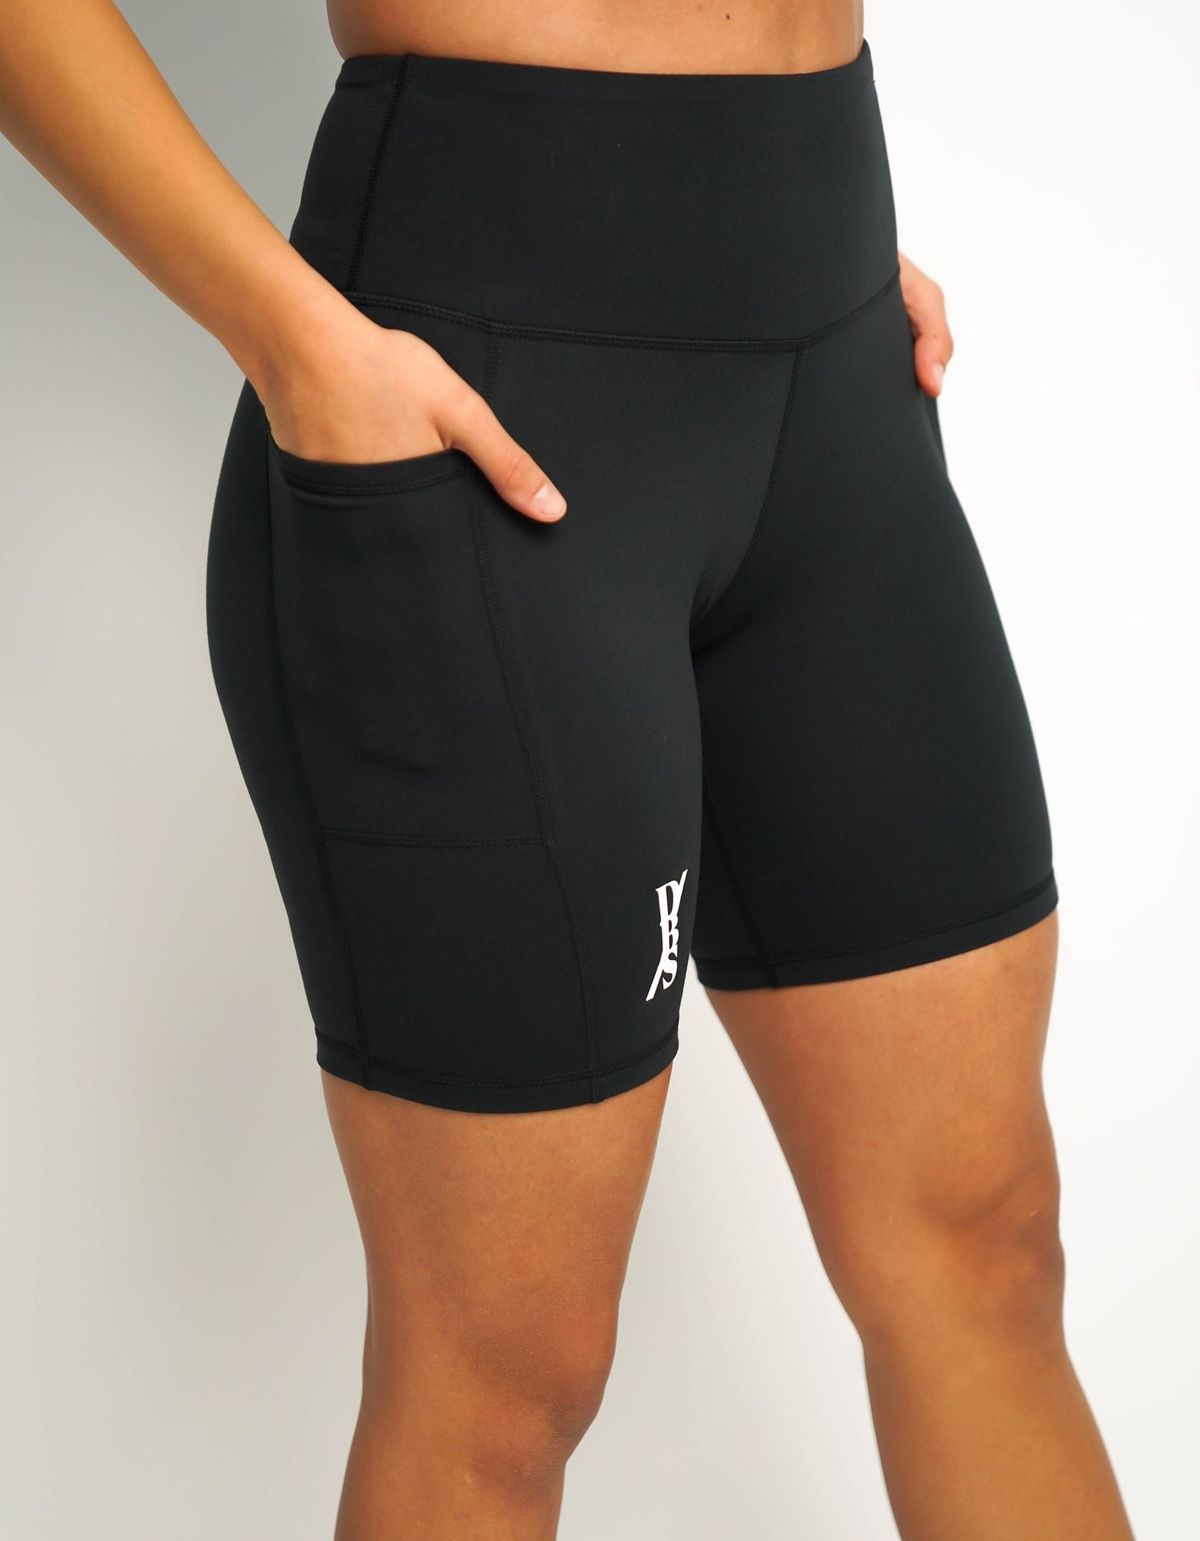 Women's Bike Shorts - Black